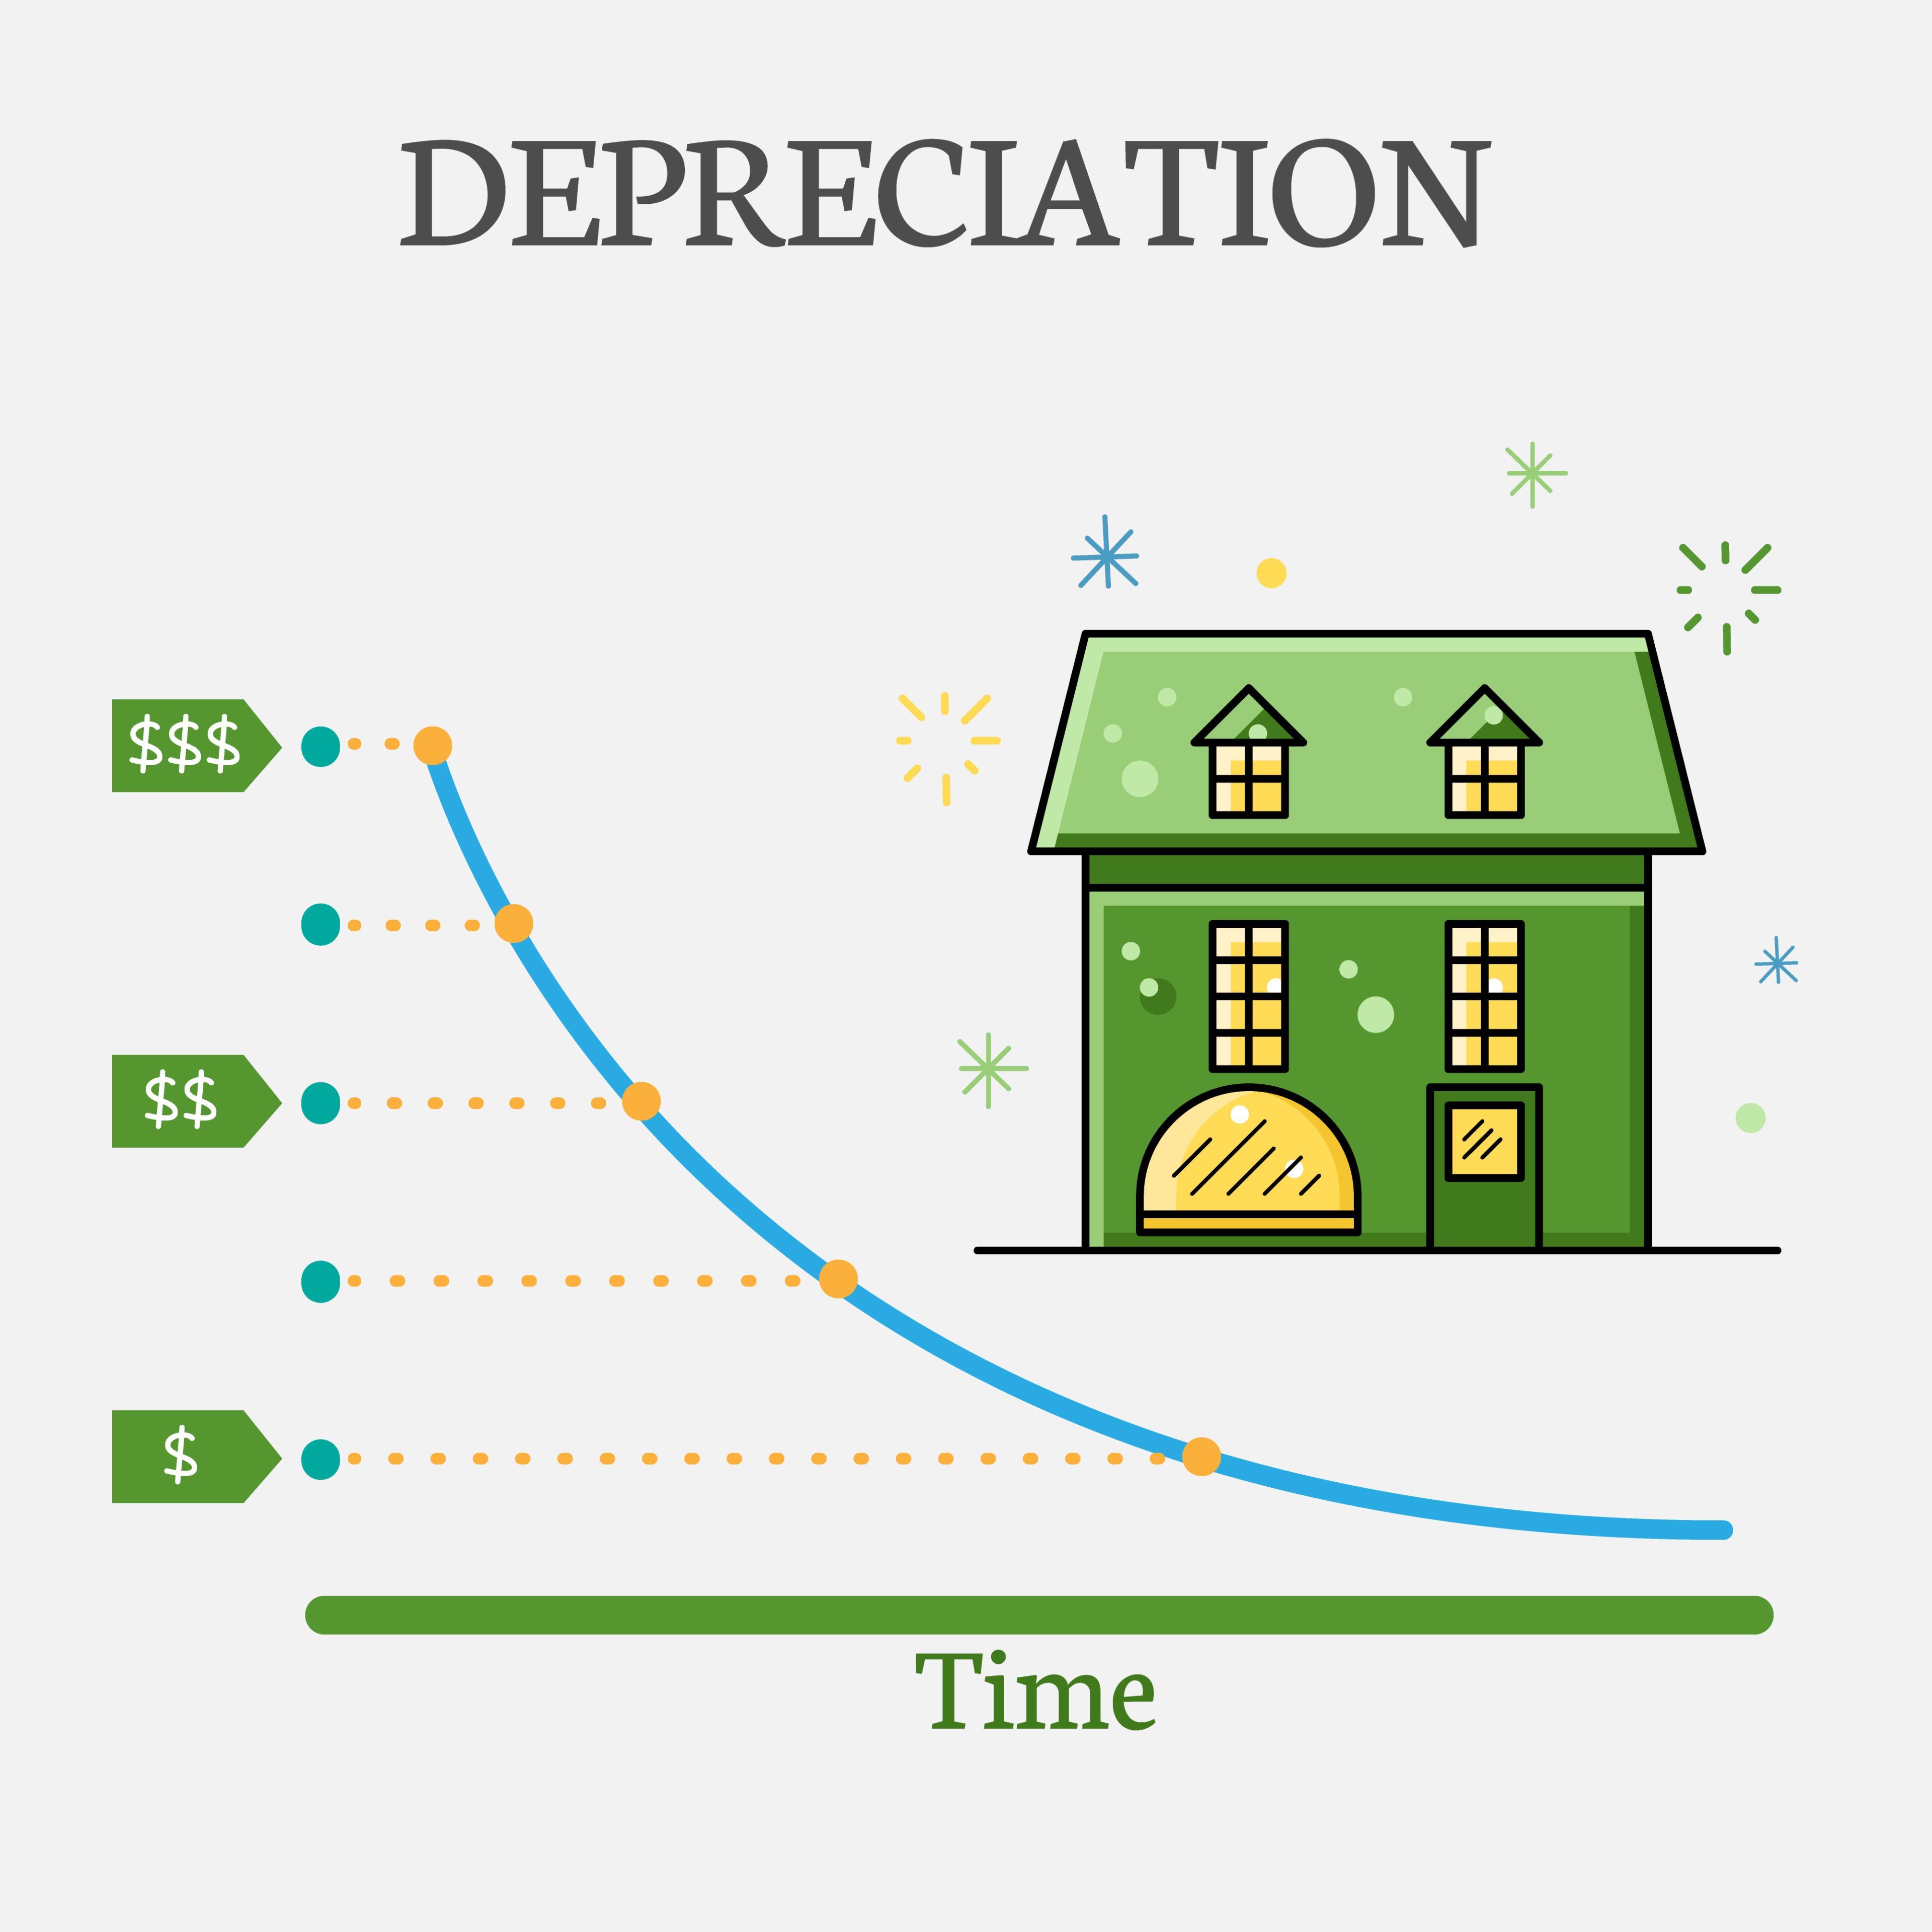 Property depreciation continues to maximise cash flow